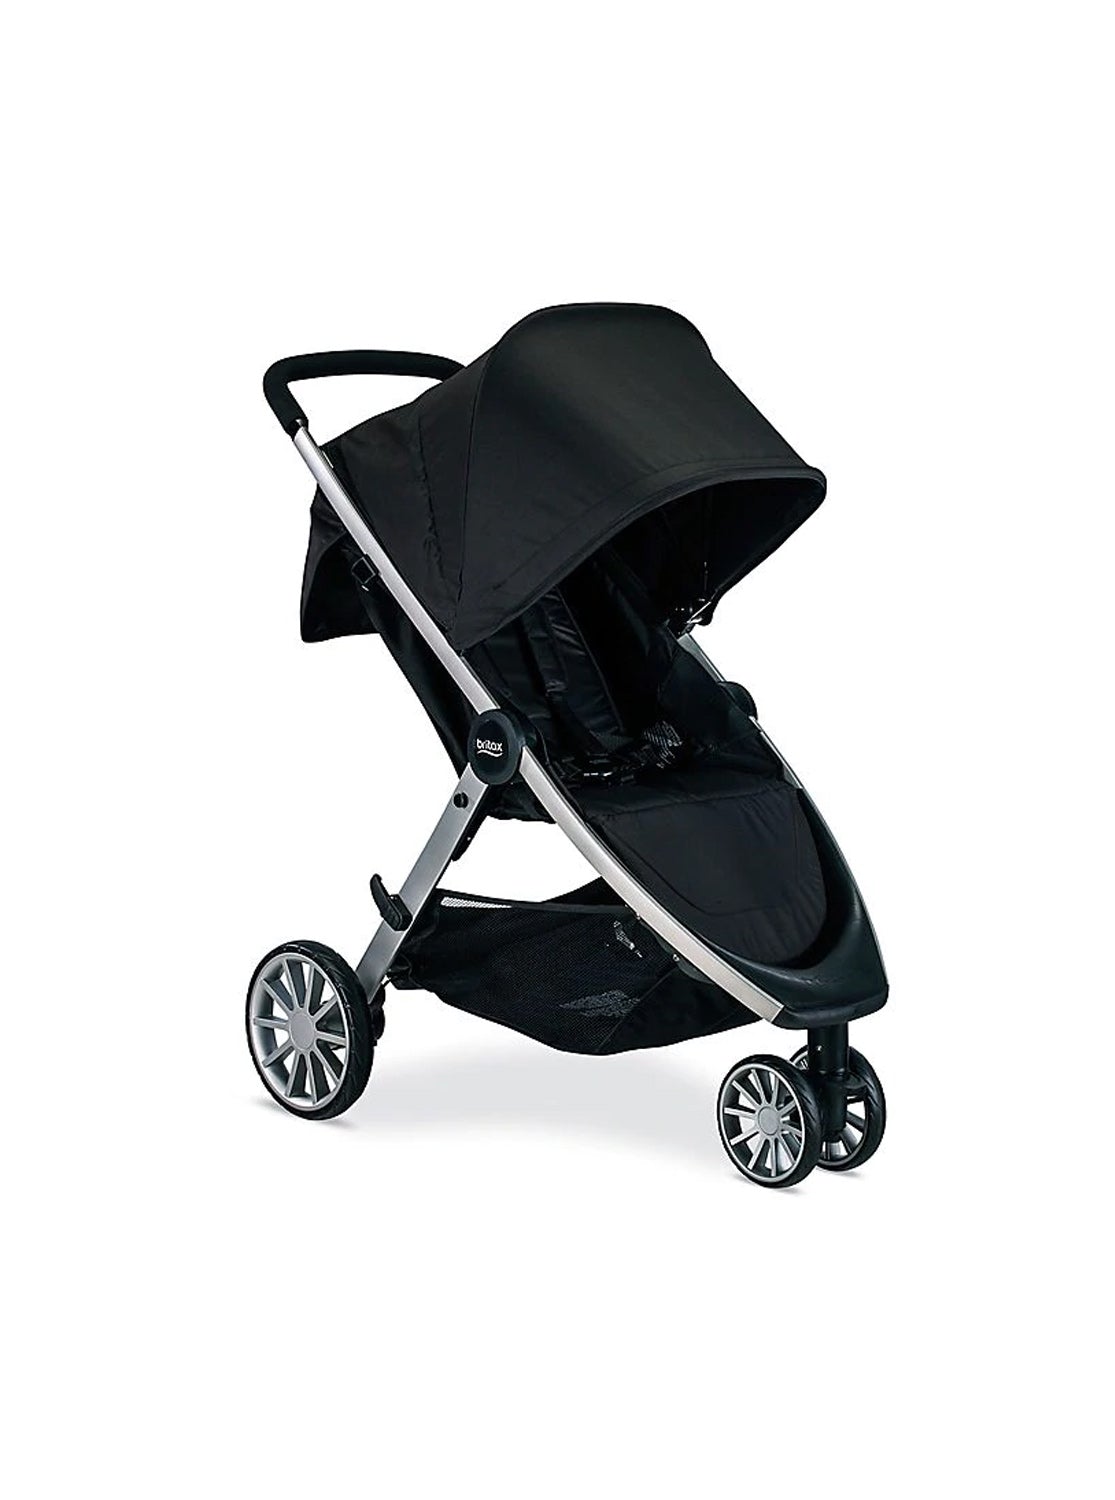 BRITAX B-Lively Lightweight Stroller - ANB Baby -$100 - $300